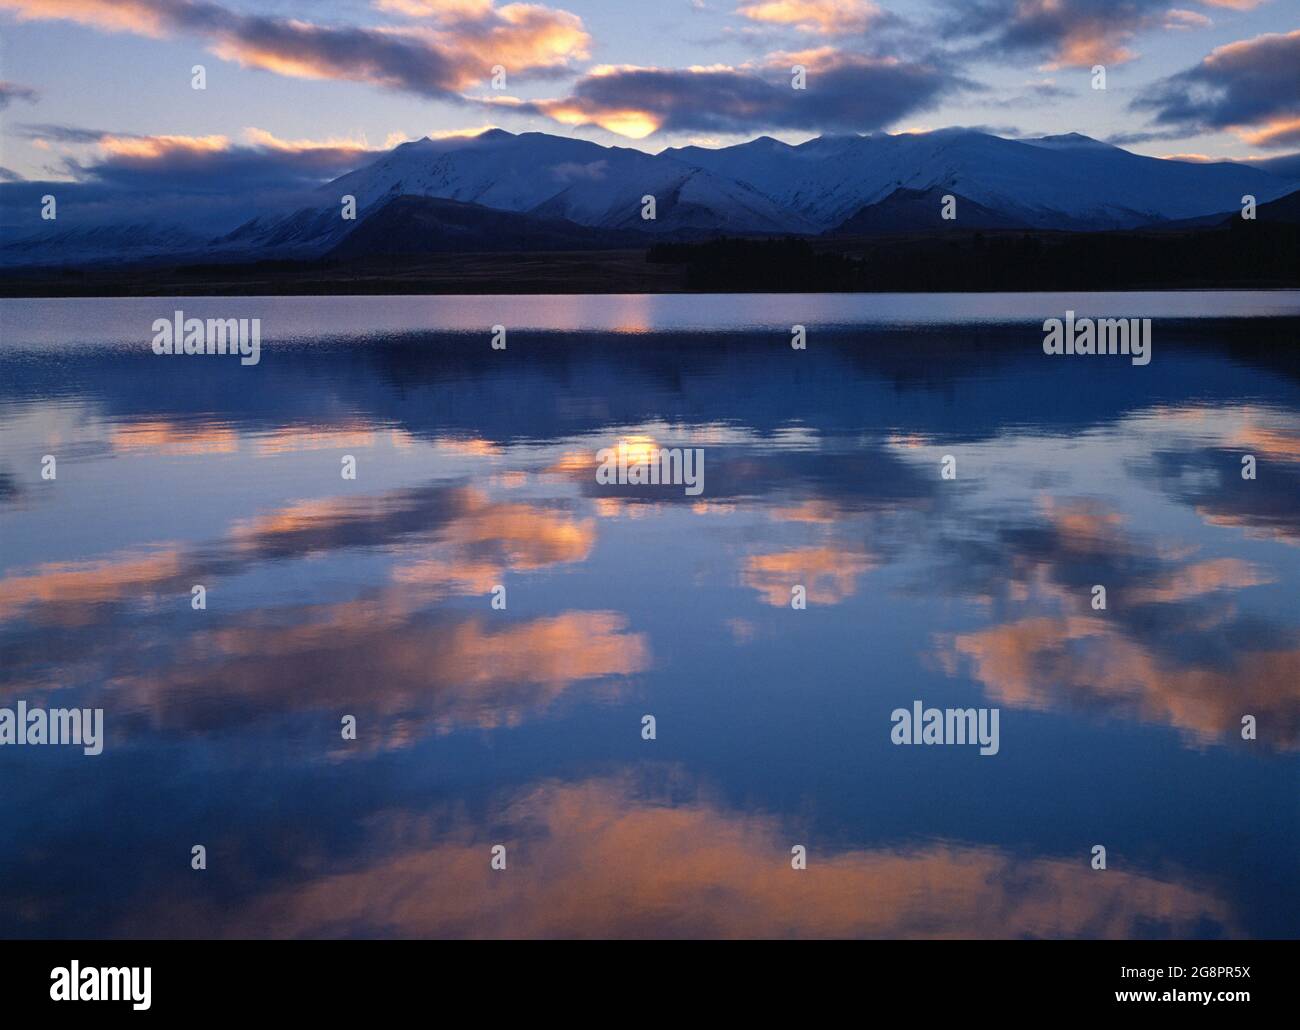 New Zealand. South Island. Southern Alps. Lake Tekapo at dusk. Stock Photo